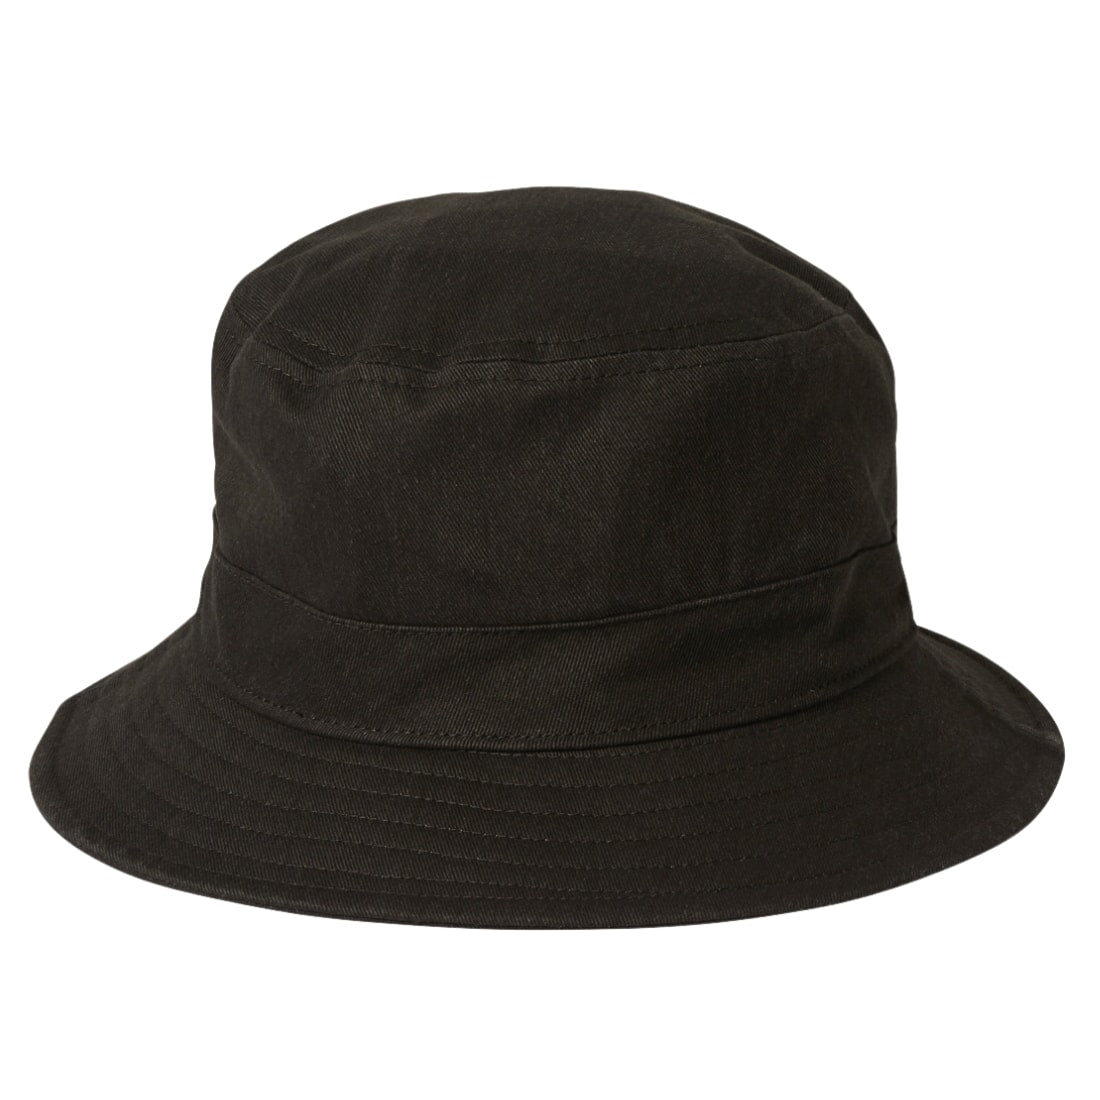 Brixton Woodburn Packable Bucket Hat - Black Sol Wash - Bucket Hat by Brixton